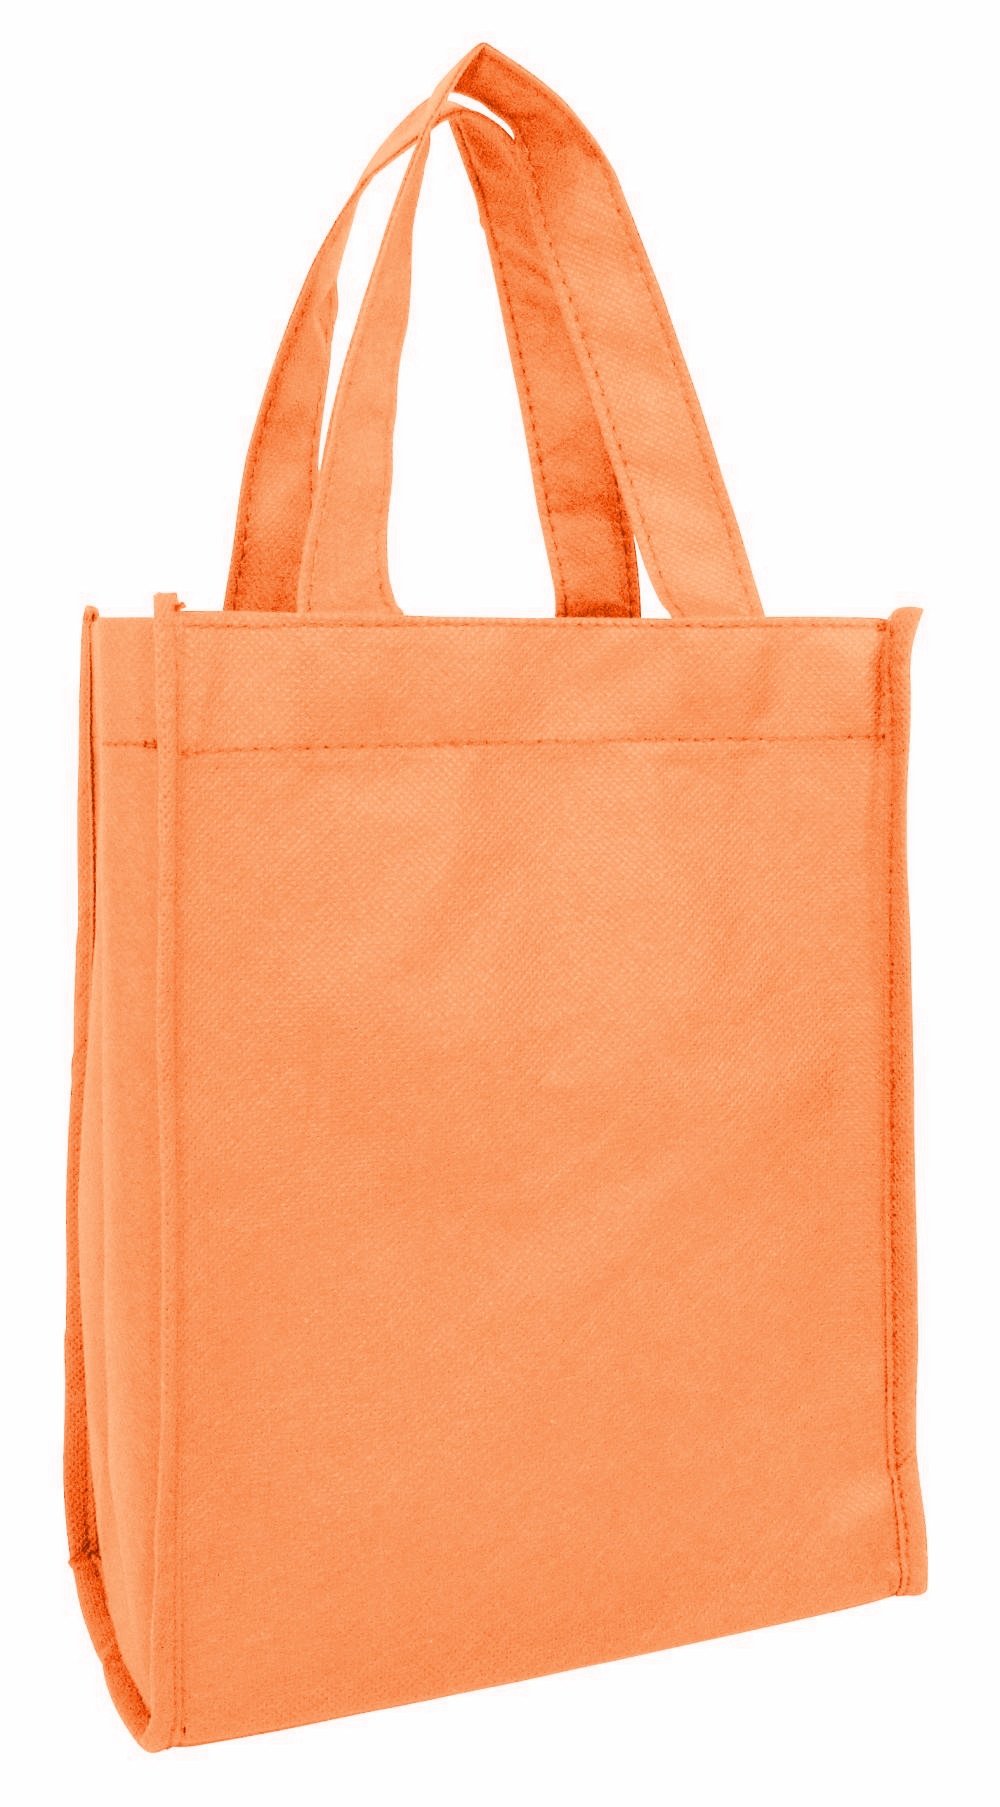 Small Book Bag Non Woven Gift Tote Bag orange